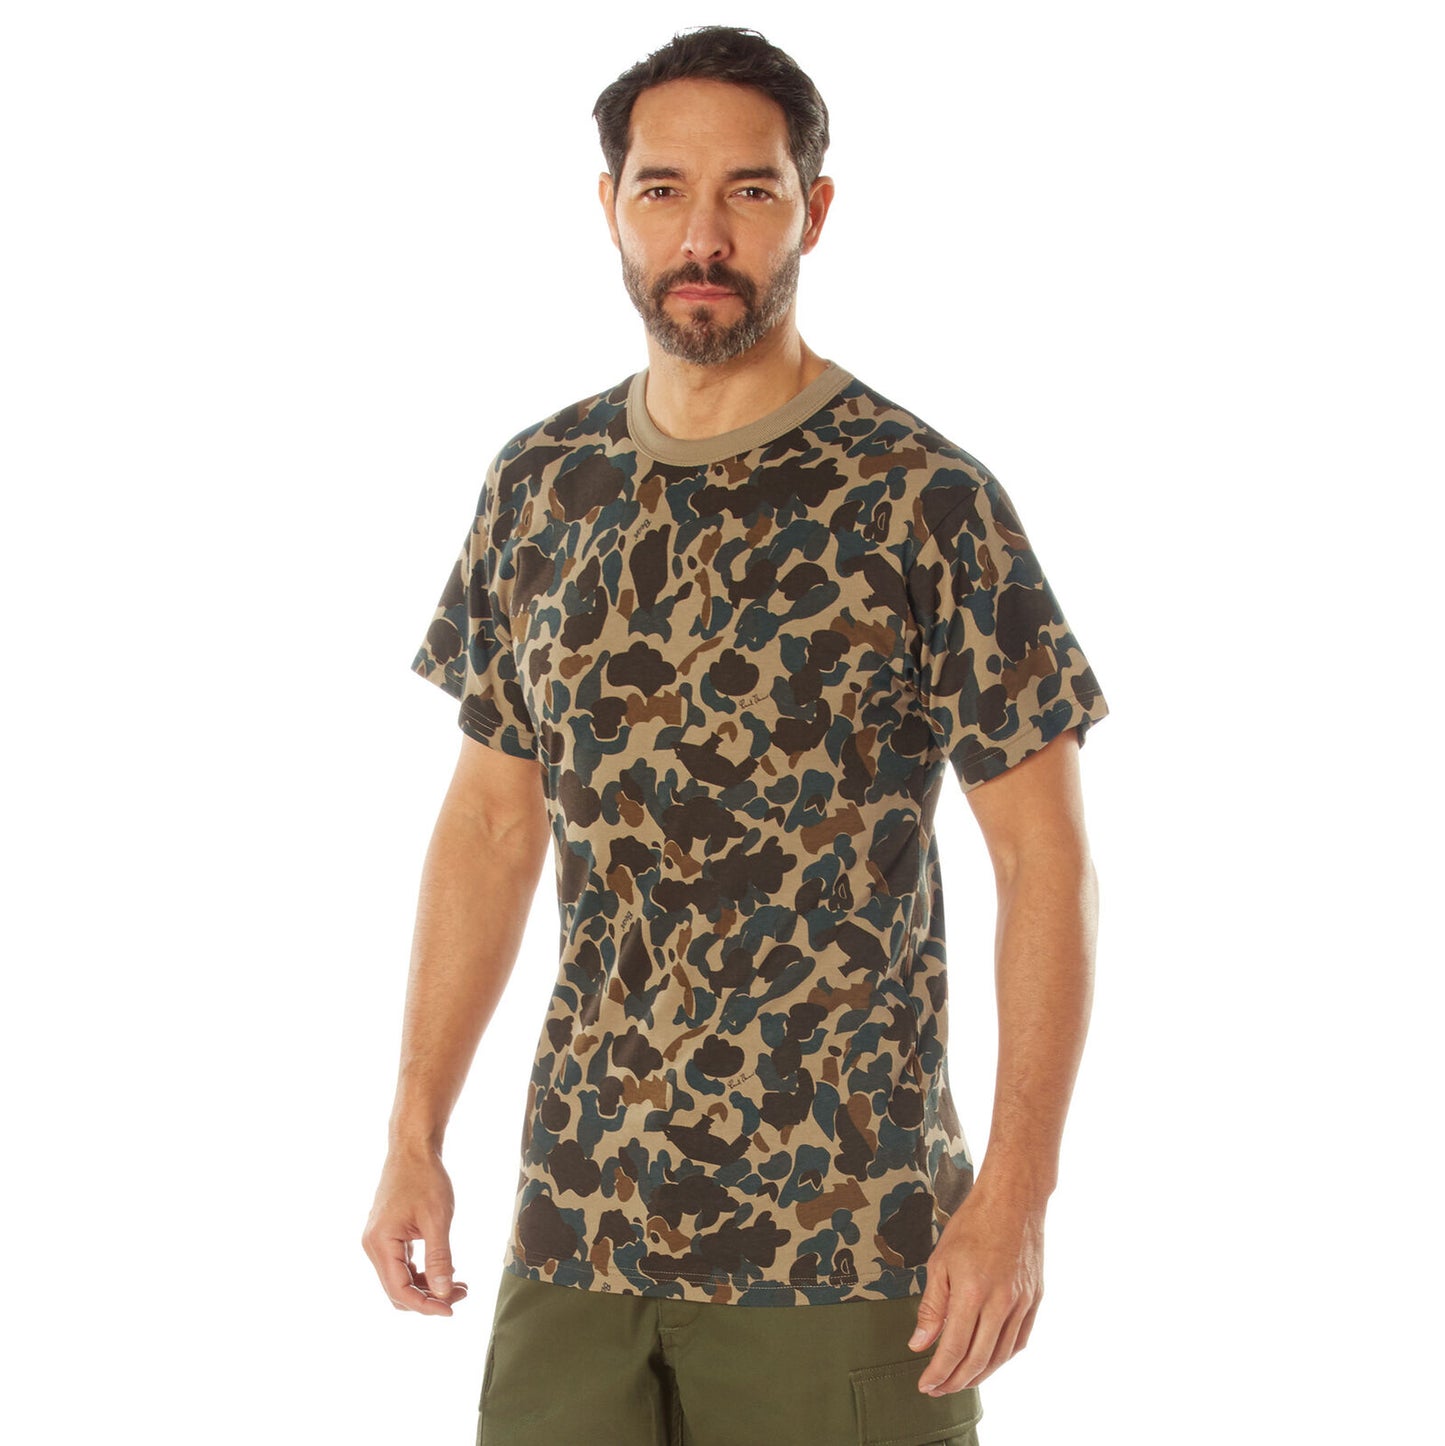 Rothco X Bear Archery Fred Bear Camo T-Shirt - Standard Fit Camouflage Shirt